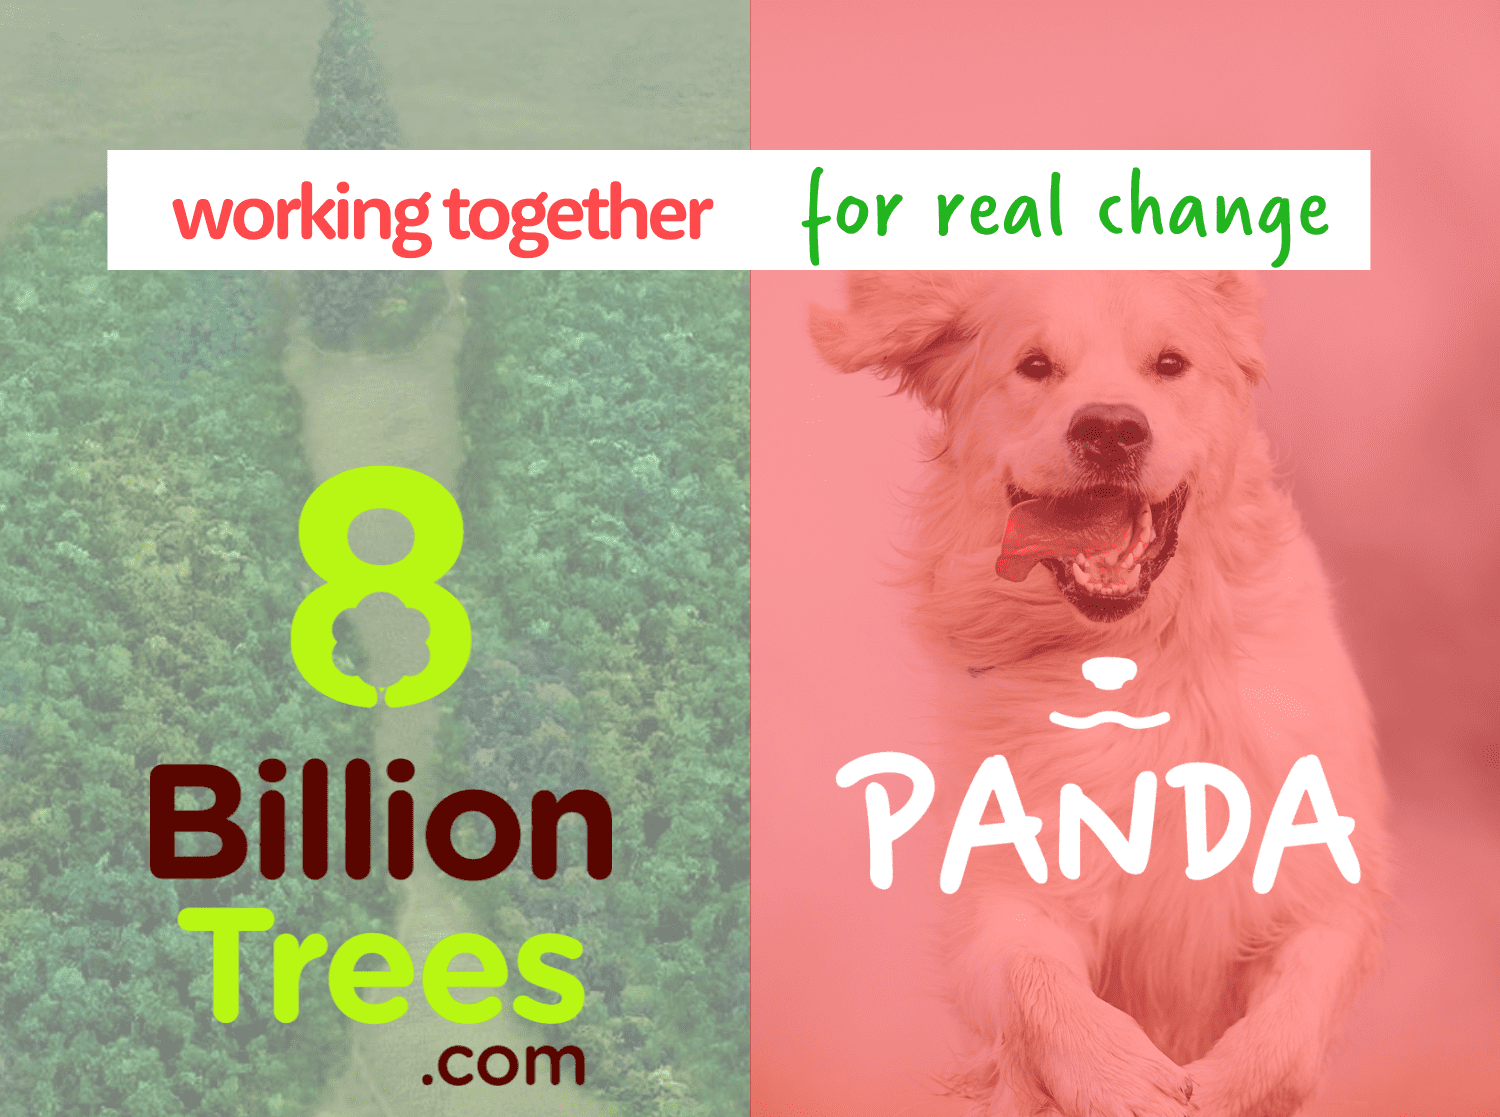 Partnerschaft mit 8 Billion Trees - Panda Tierversicherung